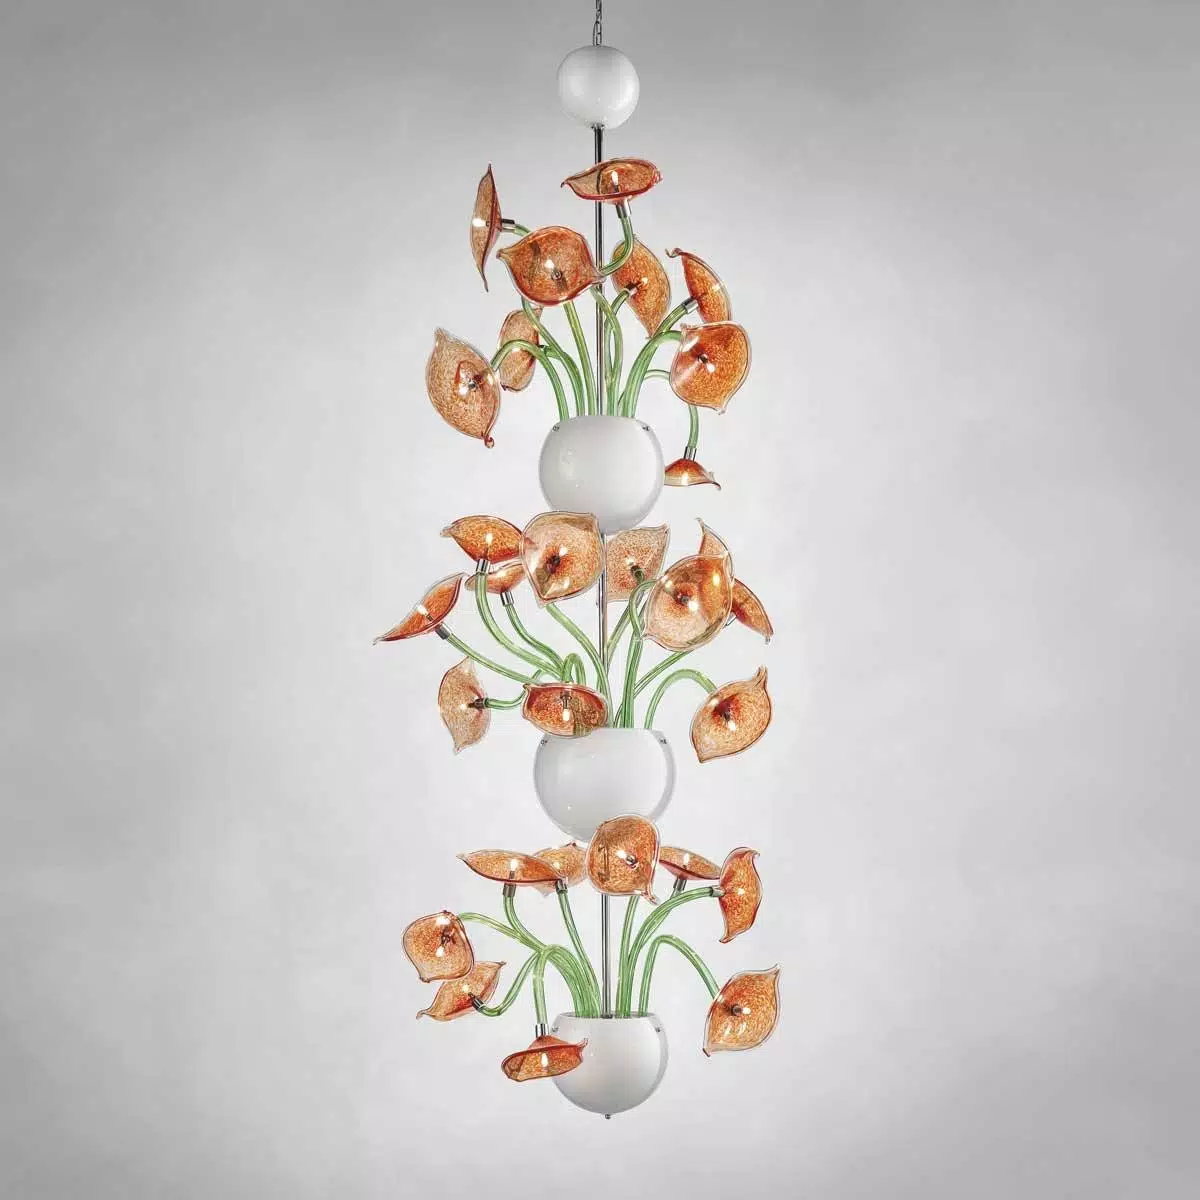 "Debra" Murano glass chandelier - 9+11+9 lights - multicolor